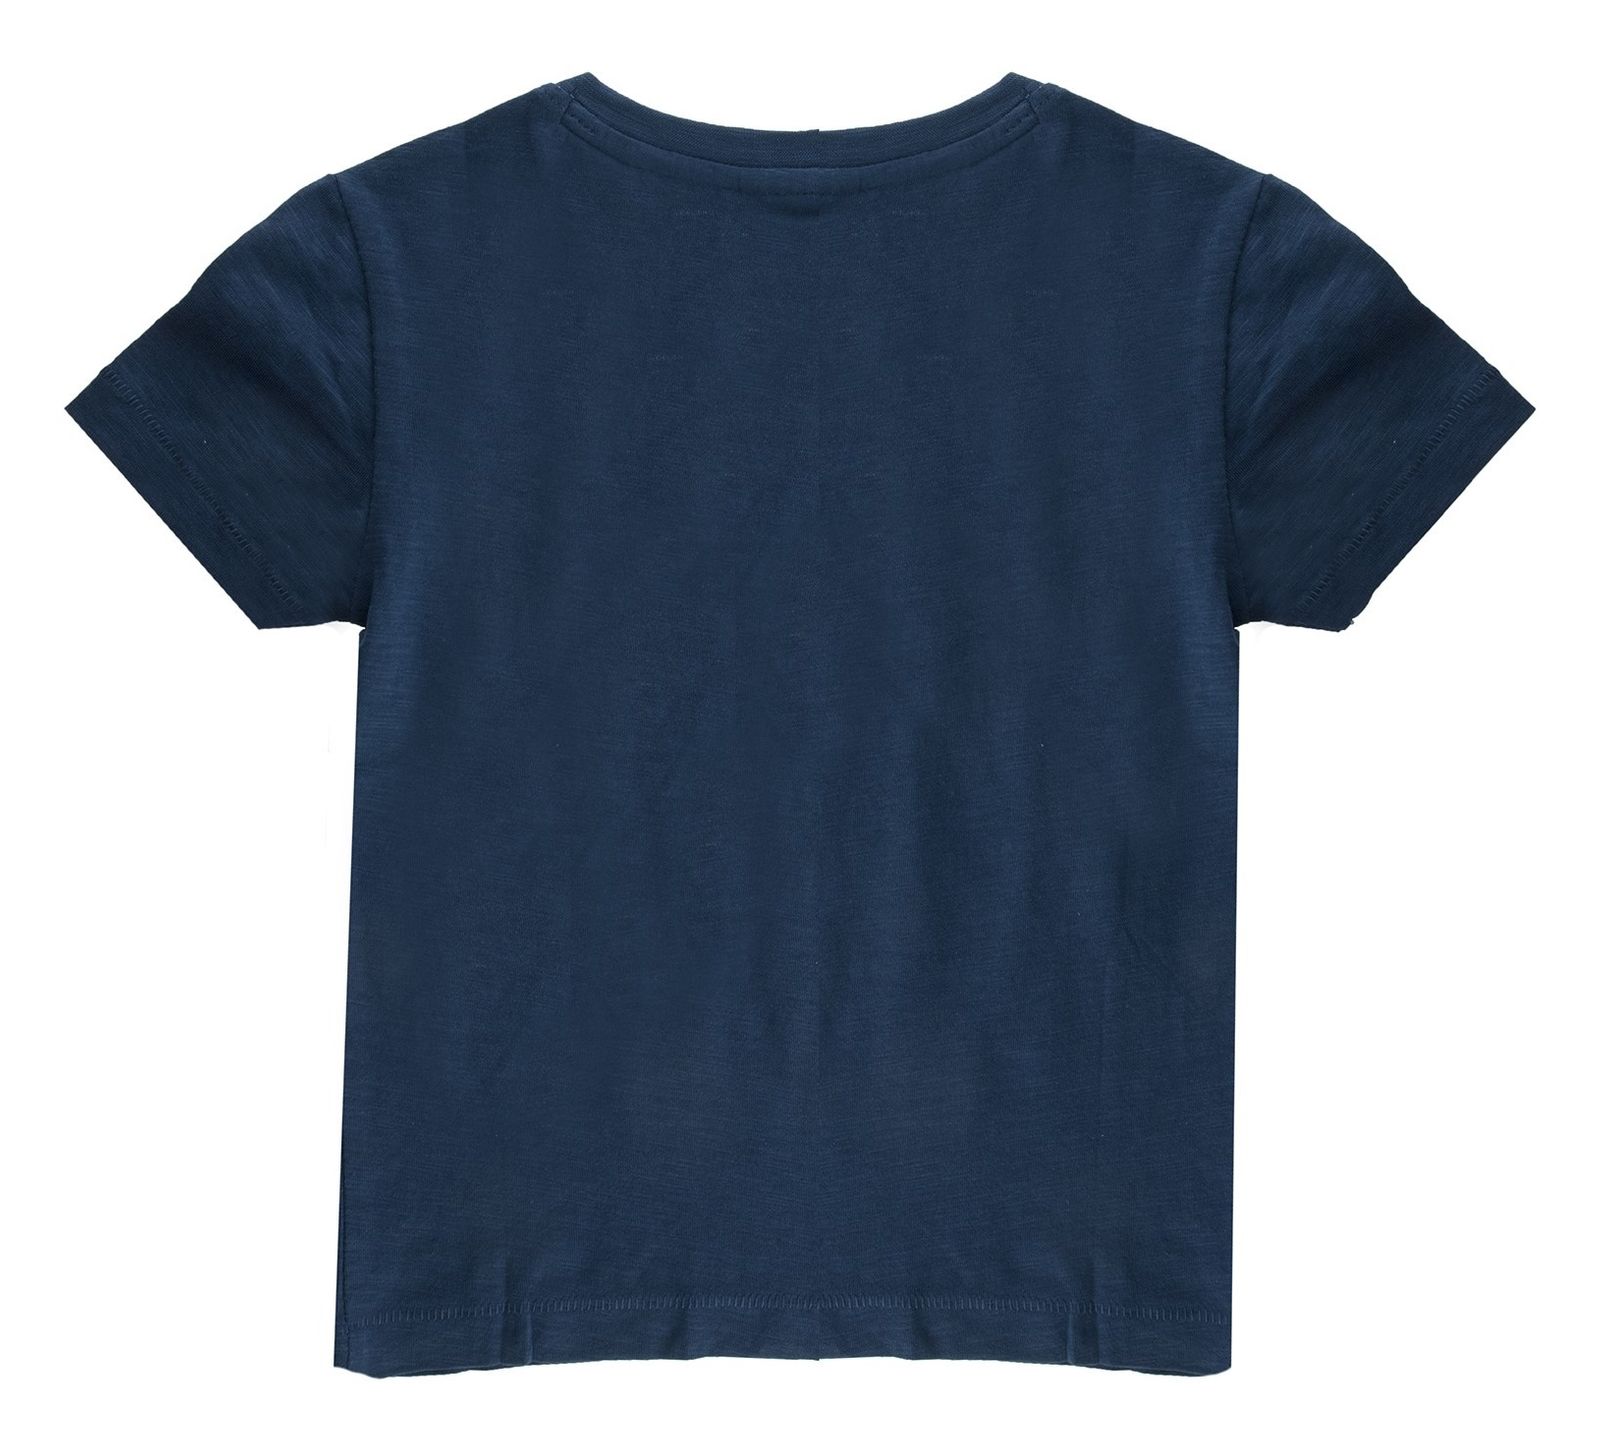 تی شرت نخی پسرانه - بلوکیدز - آبي - 3